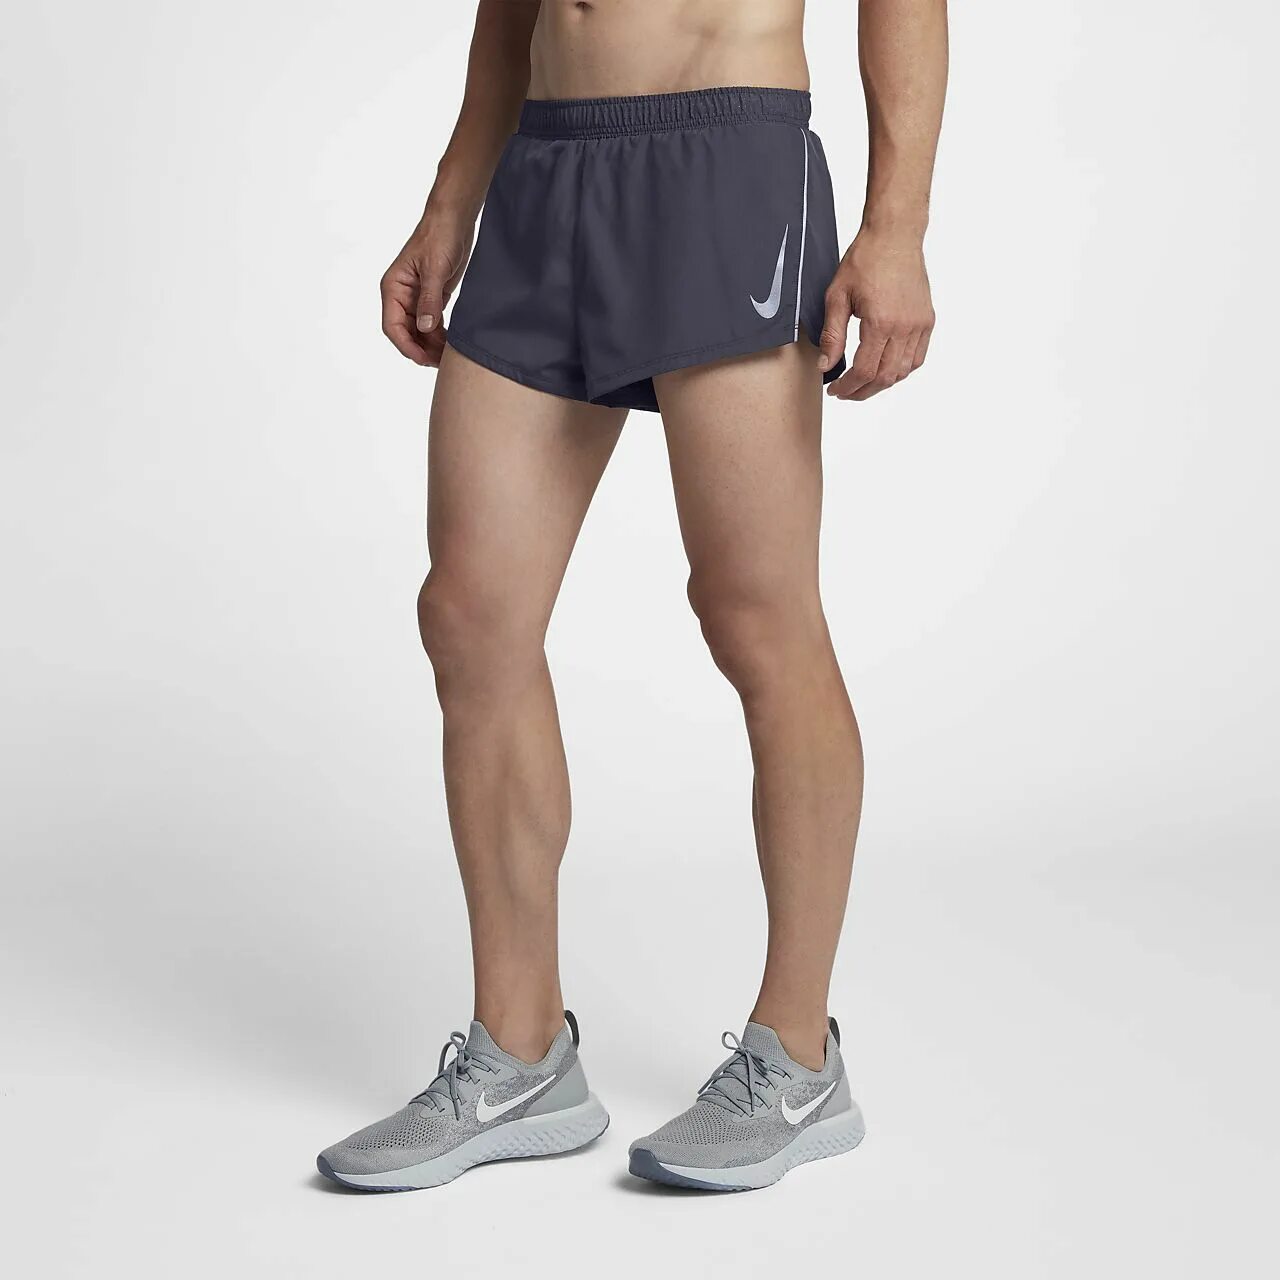 Тема шорты. Шорты Nike AEROSWIFT Mens 2 in 1. Nike Dri-Fit Sport Clash шорты. Nike Flex Cpurt shorts man. Джим Шортс найк мужской.